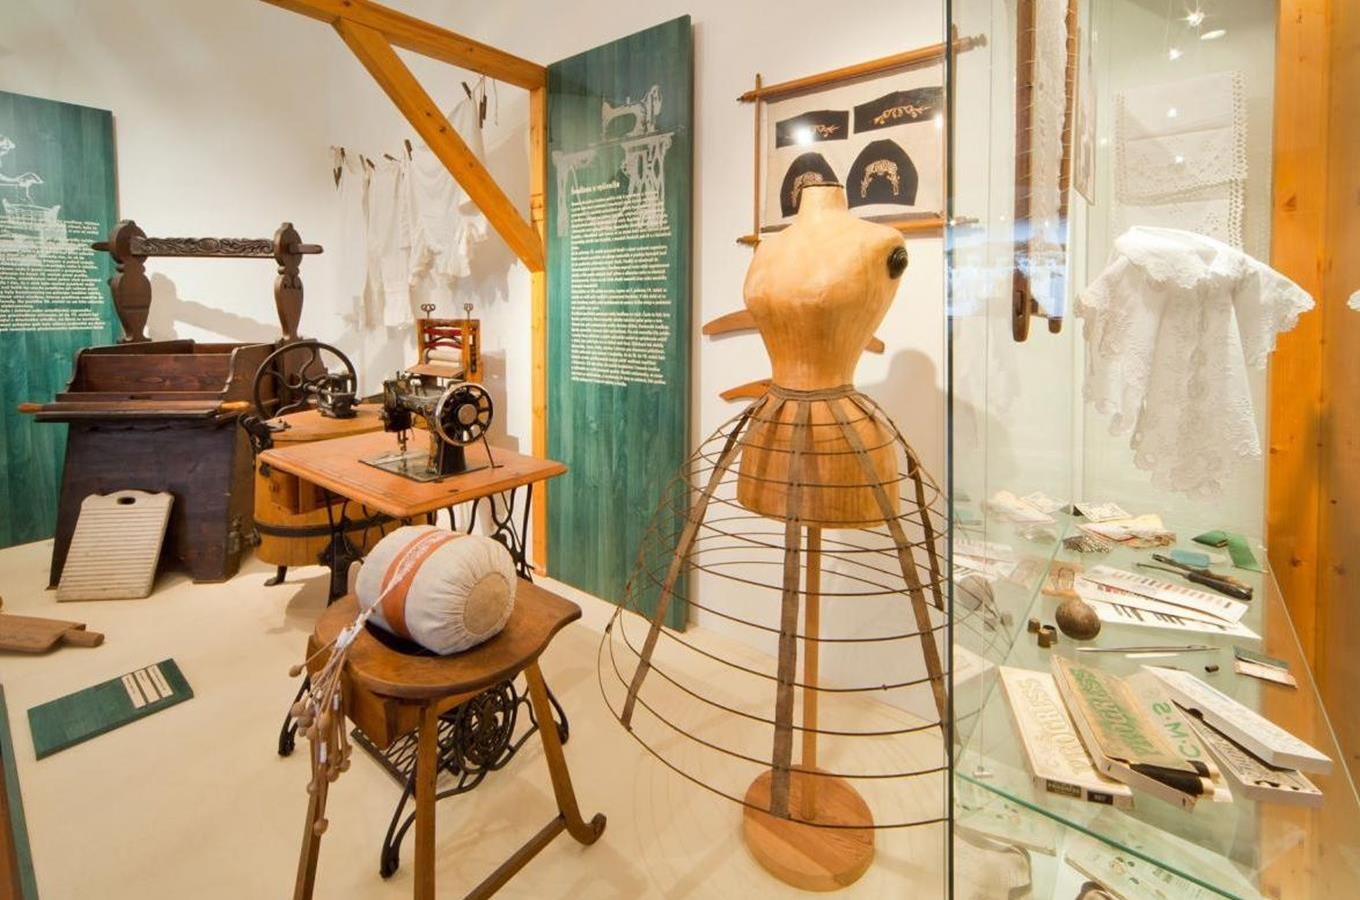 Výstava Od turnýry k secesi - móda na prelomu 19. a 20. století predstavuje historické šaty a ruzné dobové módní doplnky